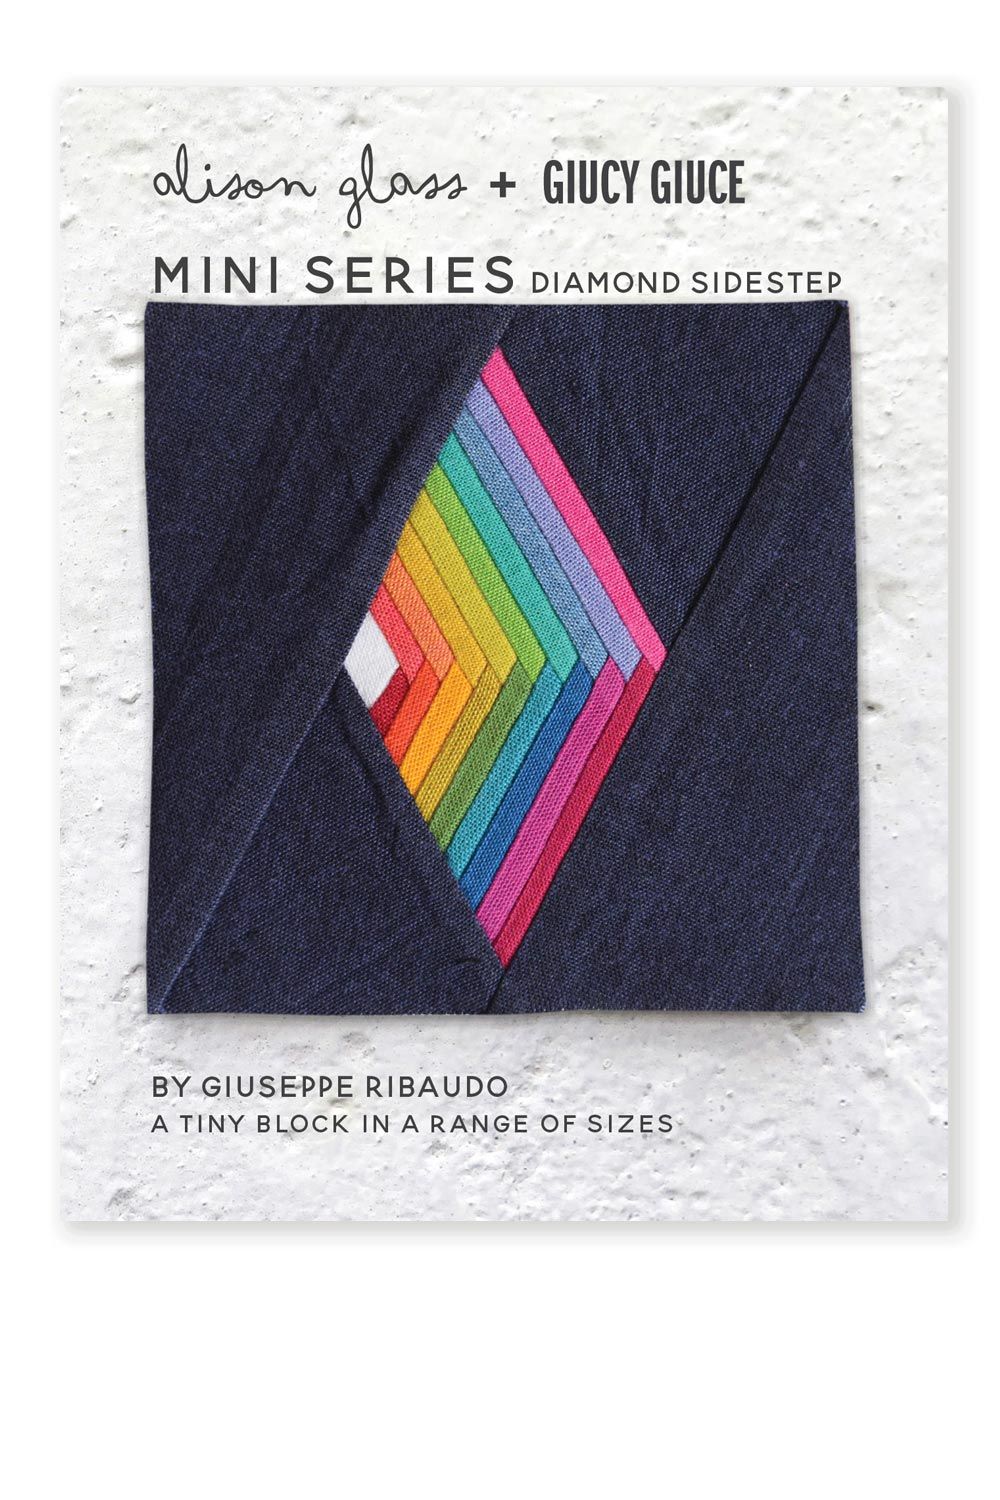 NEW Mini Series Diamon Sidestep Alison Glass + Giucy Giuce Quilt Mini Block